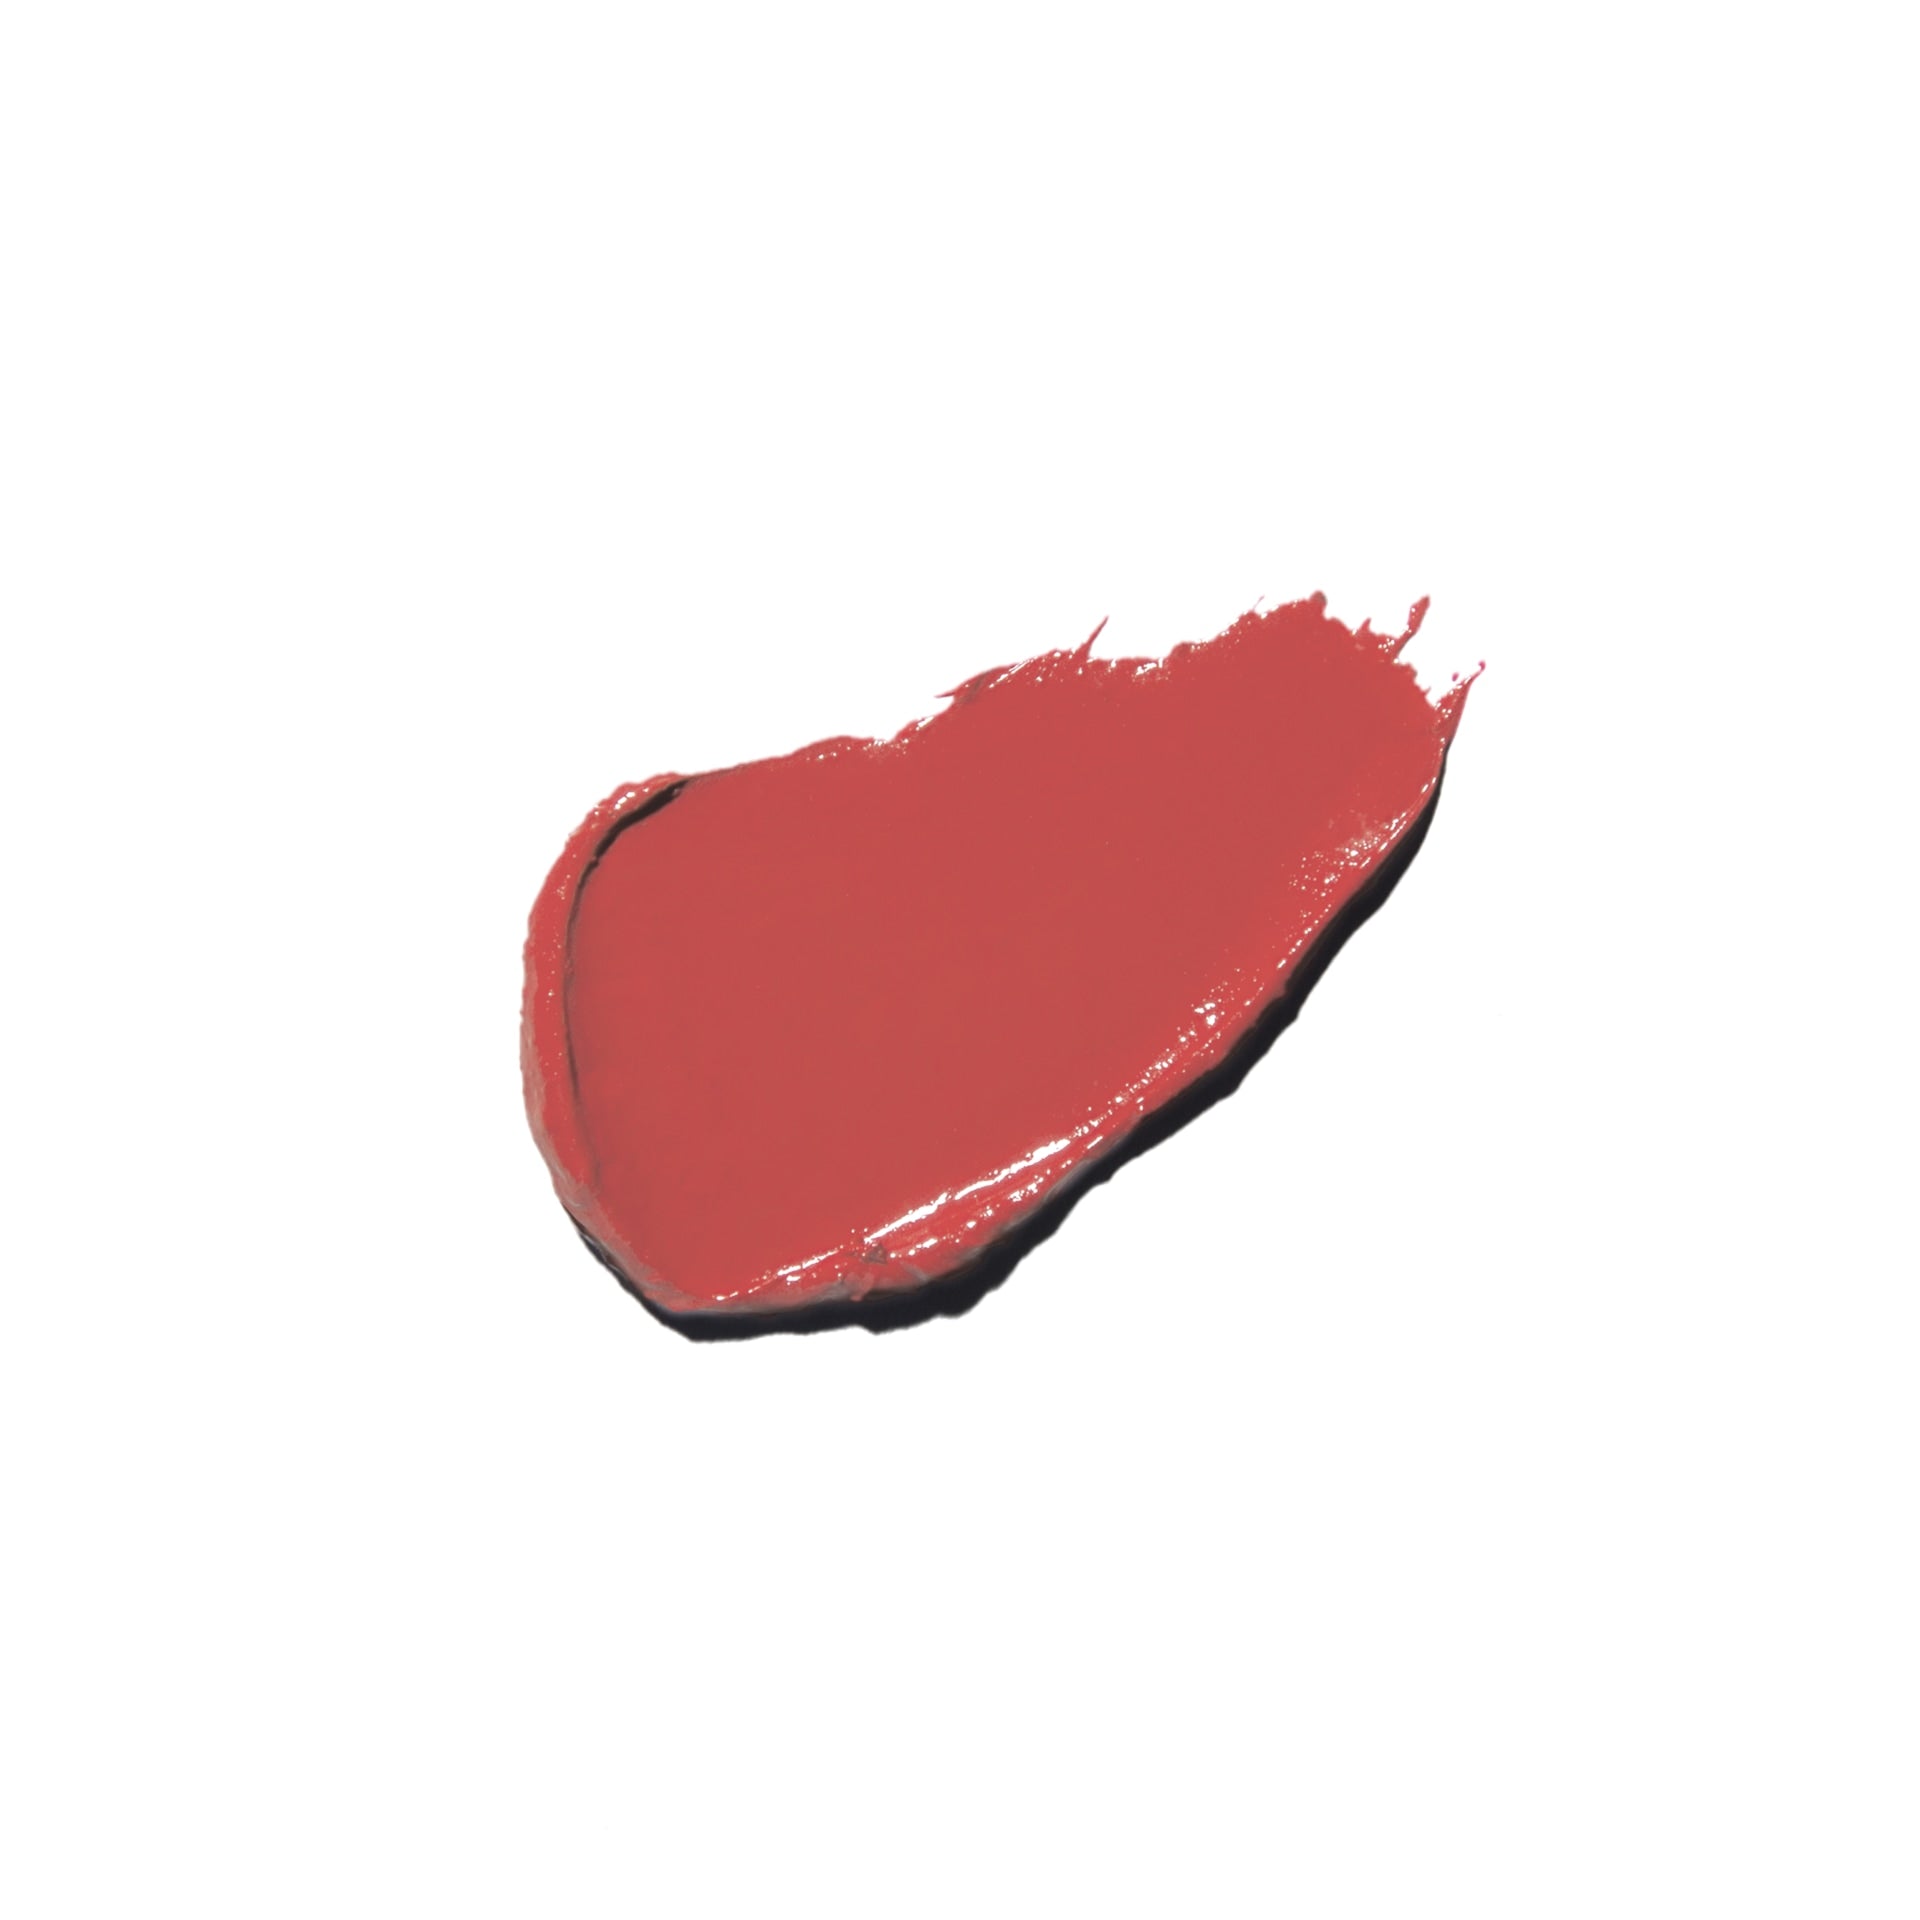 100% PURE Fruit Pigmented Lip Glaze coraline